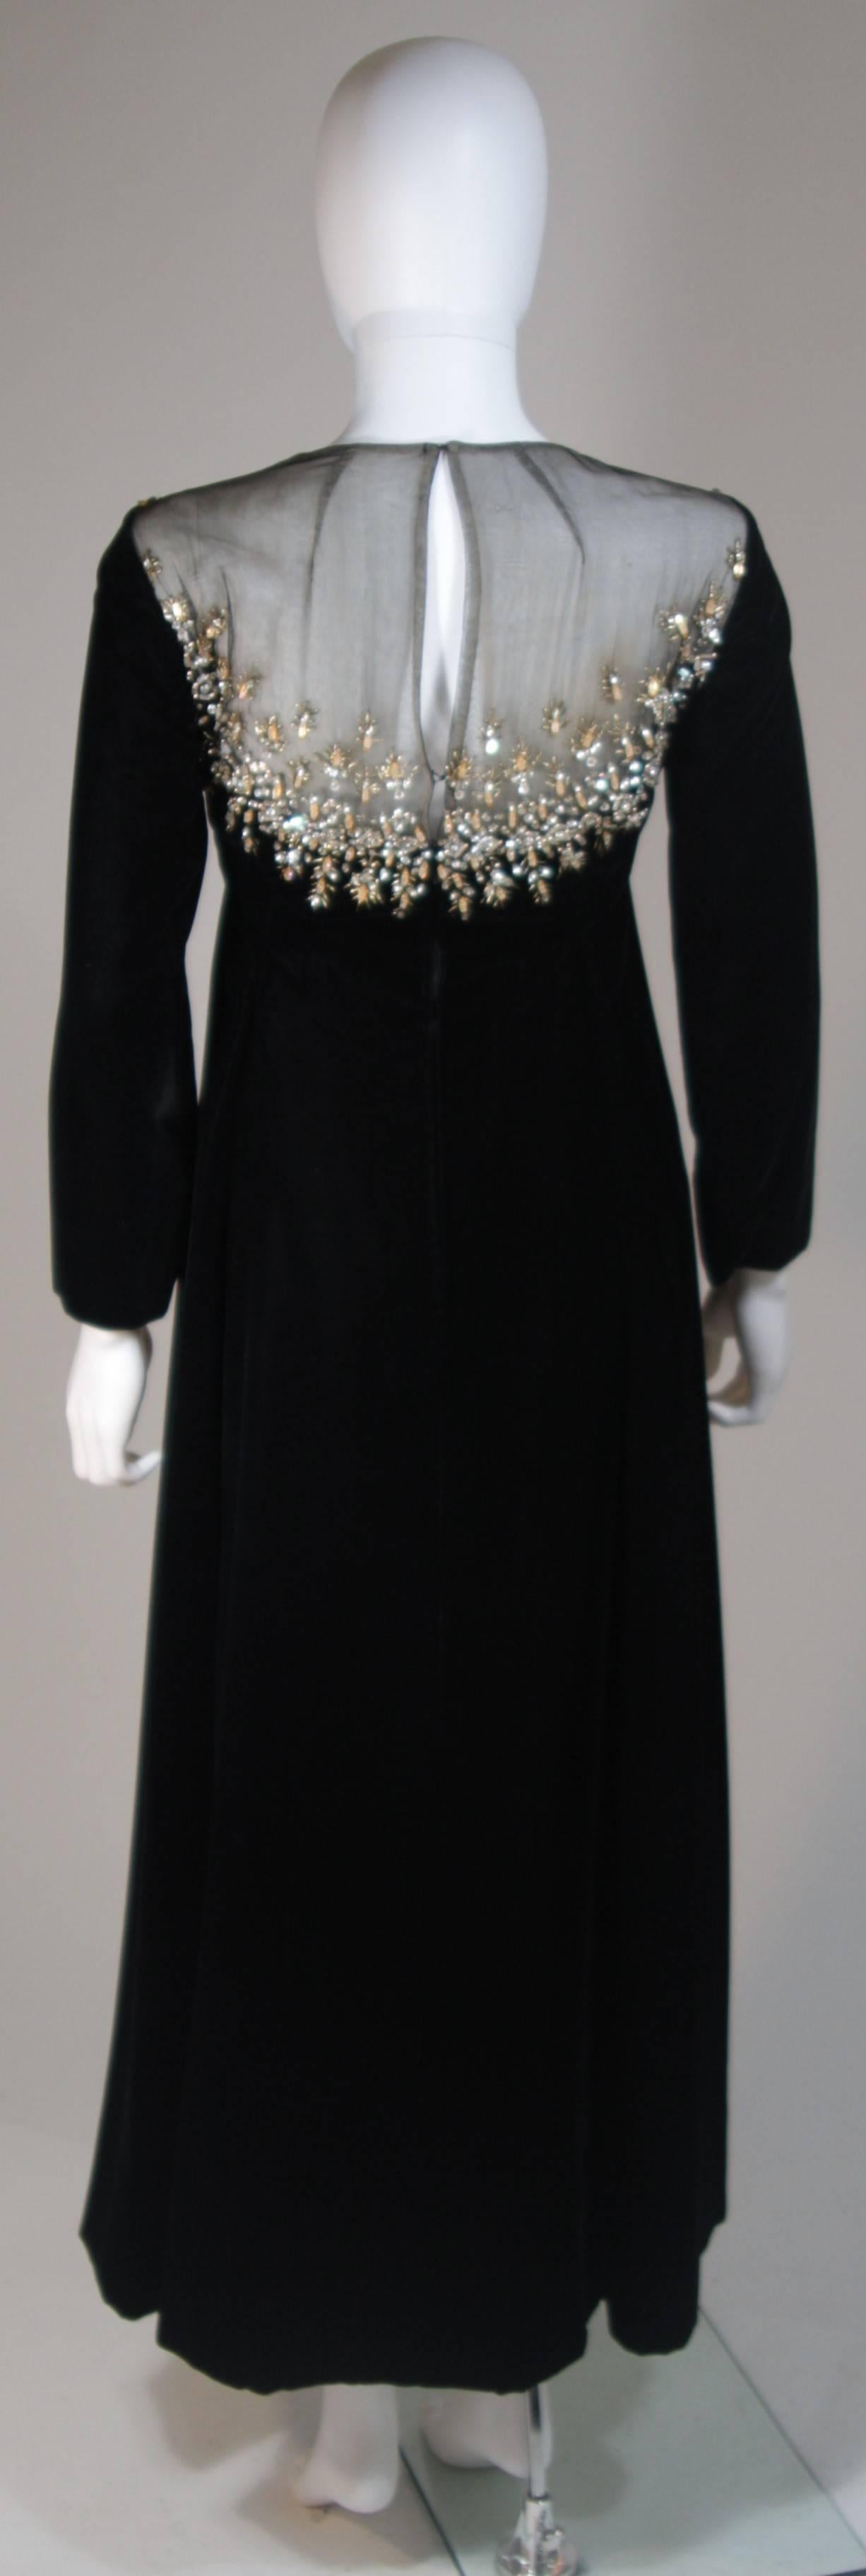 MALCOLM STARR Black Velvet Gown with Sheer Neckline & Rhinestone Applique Size 8 4